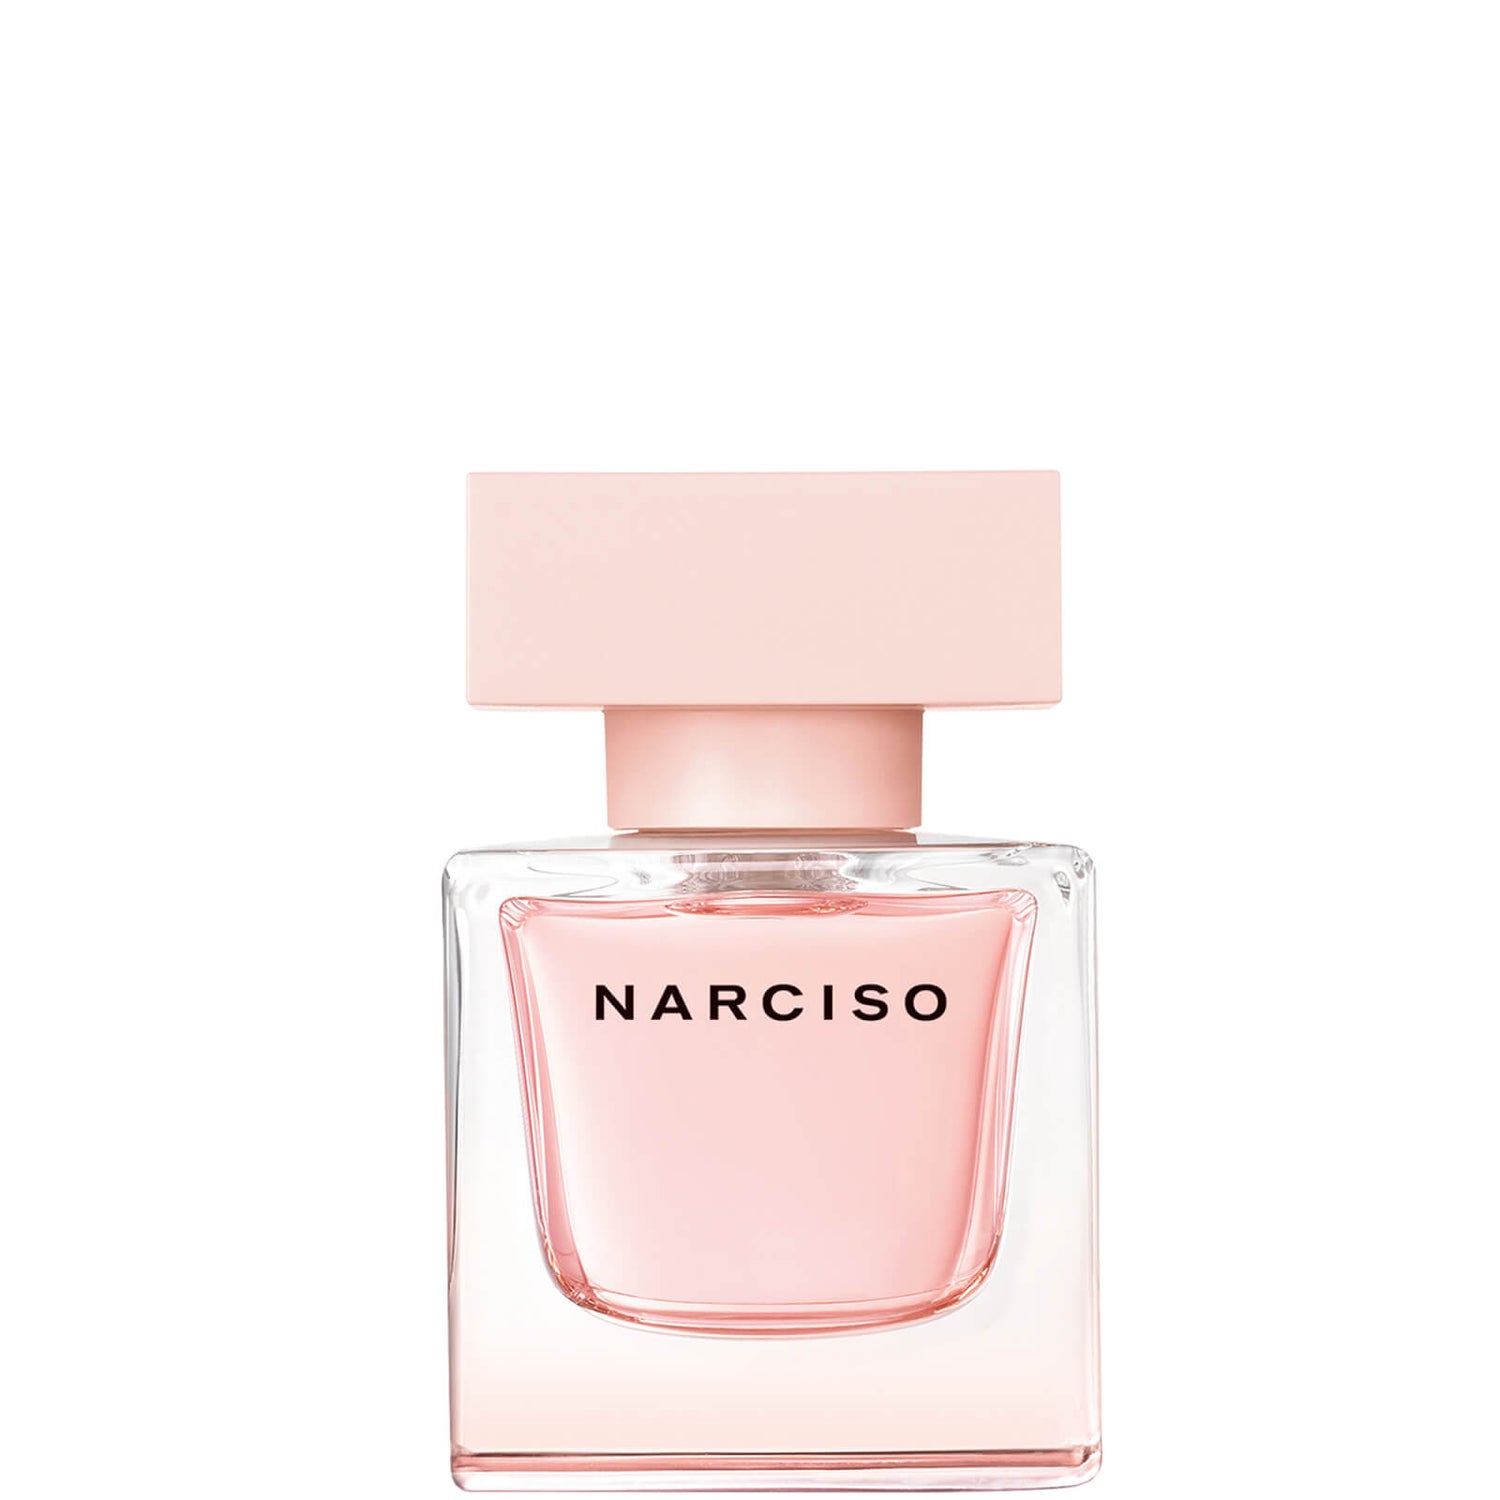 Narciso Rodriguez Cristal Eau de Parfum 30ml